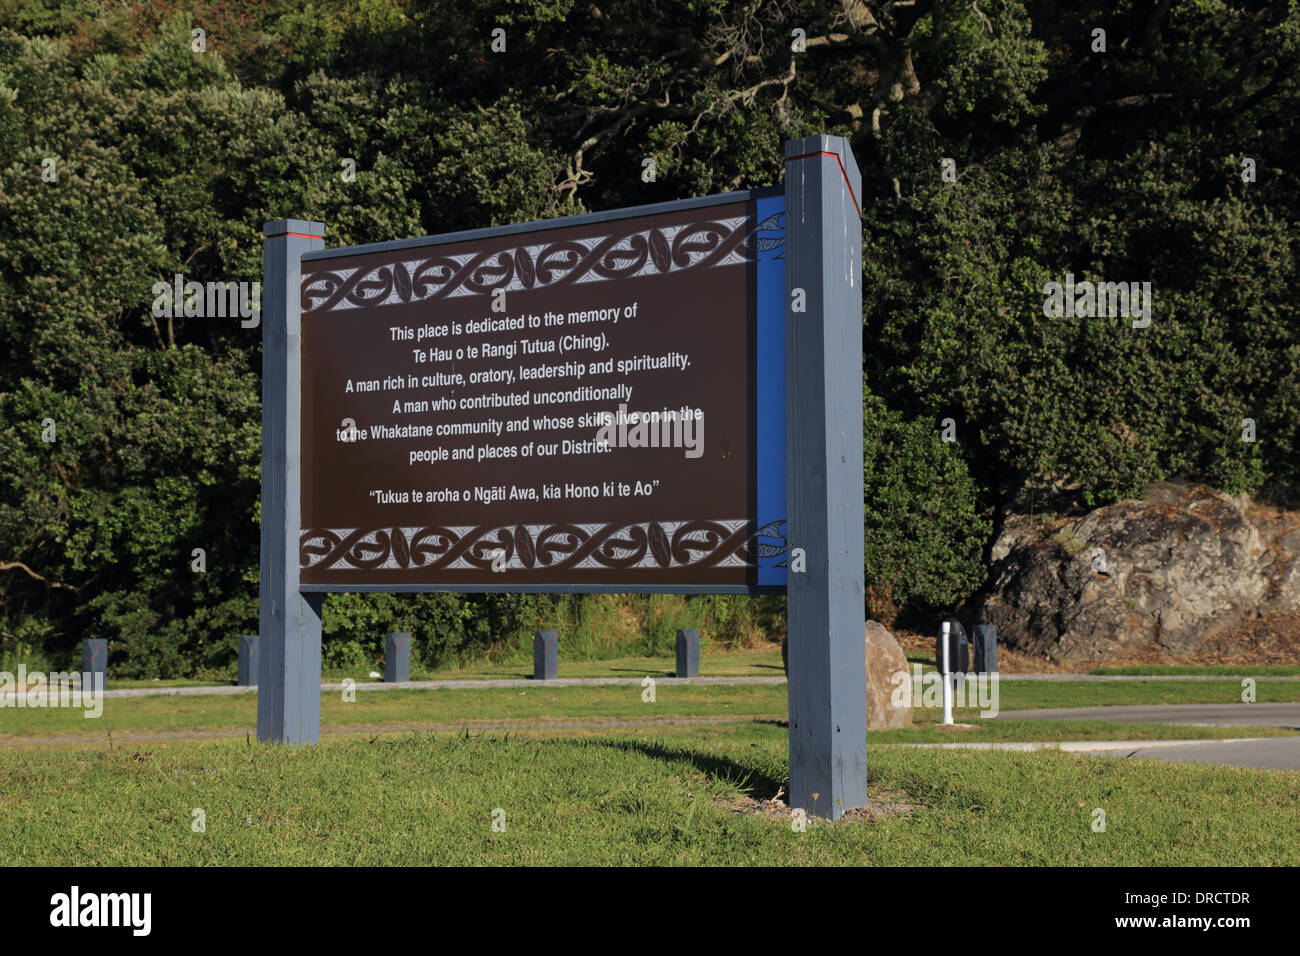 Sign dedicating area to Te Hau o te Rangi Tutua (Ching) Whakatane, Eastern Bay of Plenty, North Island, New Zealand Stock Photo